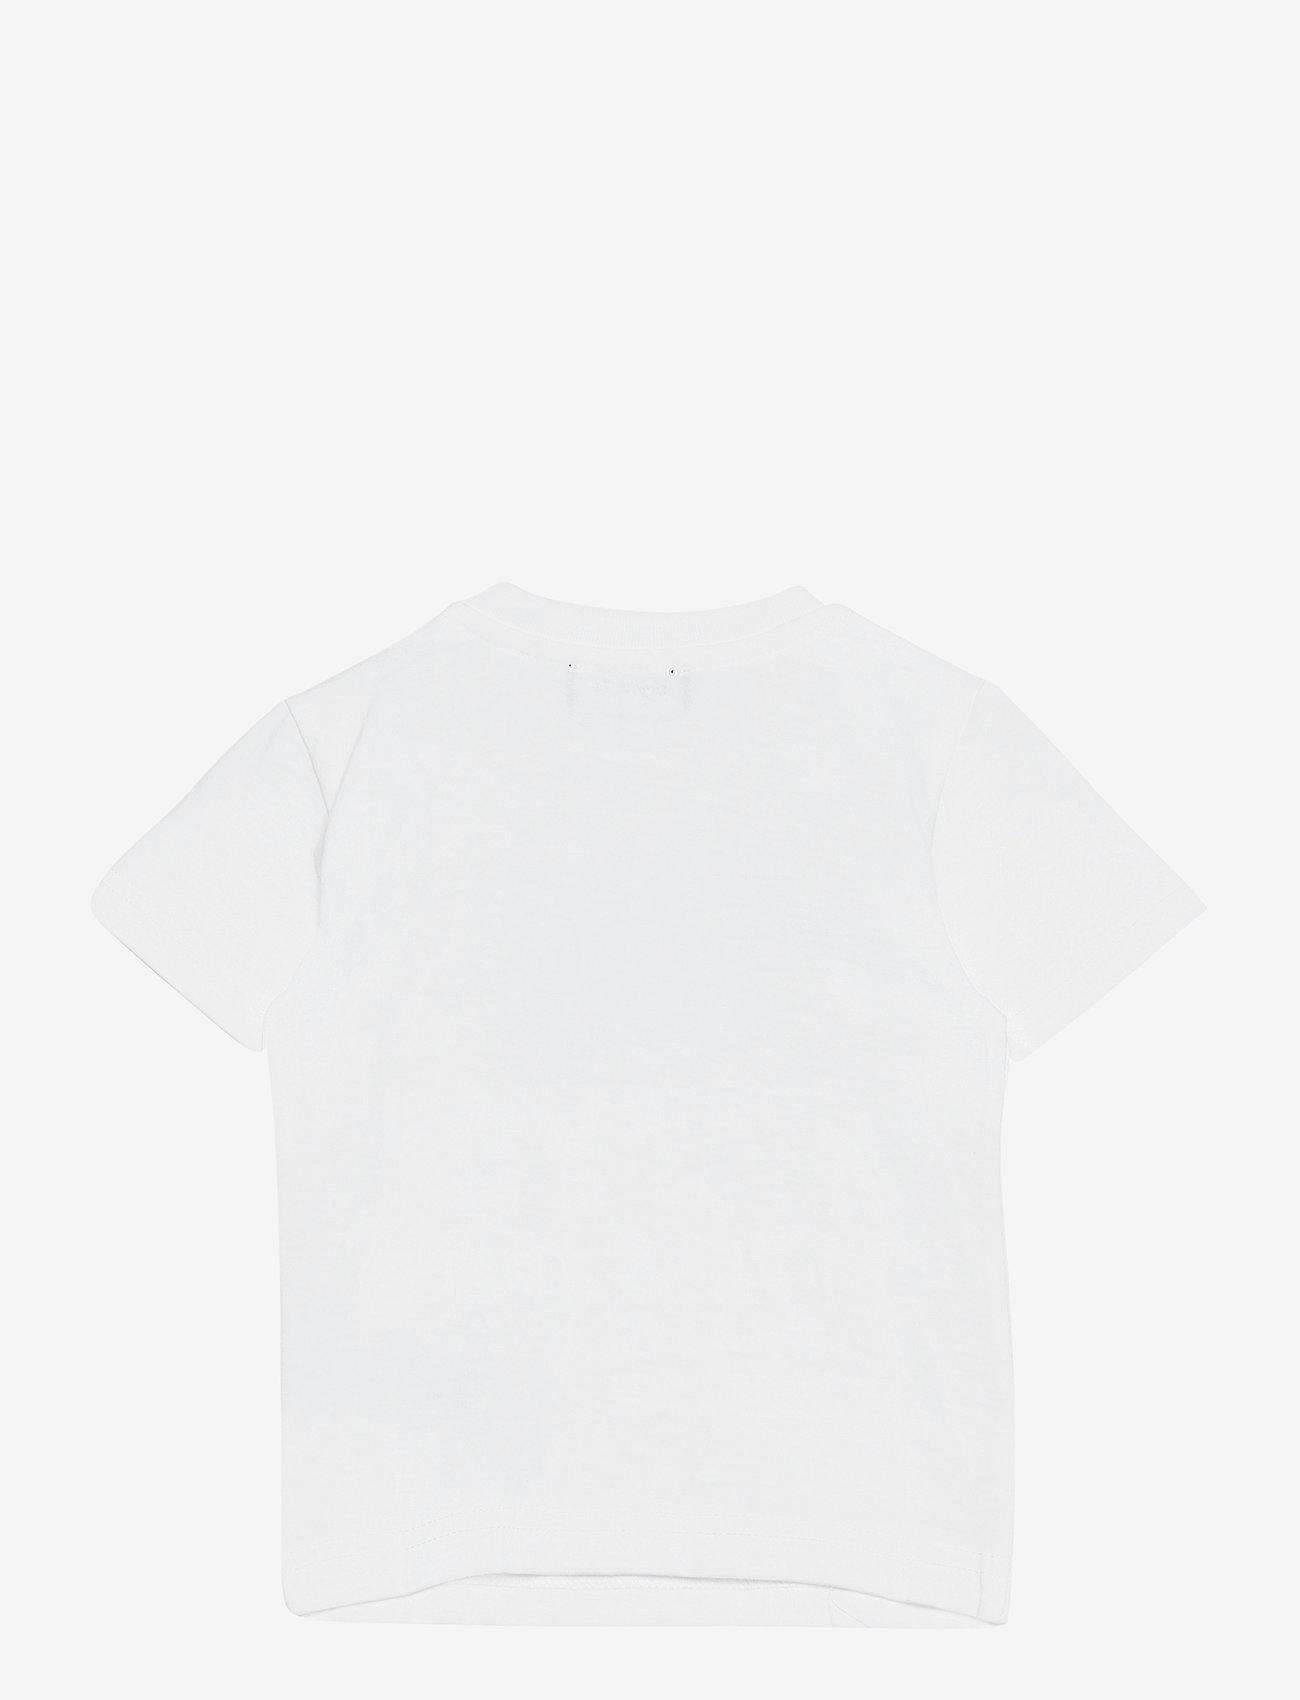 Diesel - TJUSTX62B T-SHIRT - short-sleeved t-shirts - bianco - 1